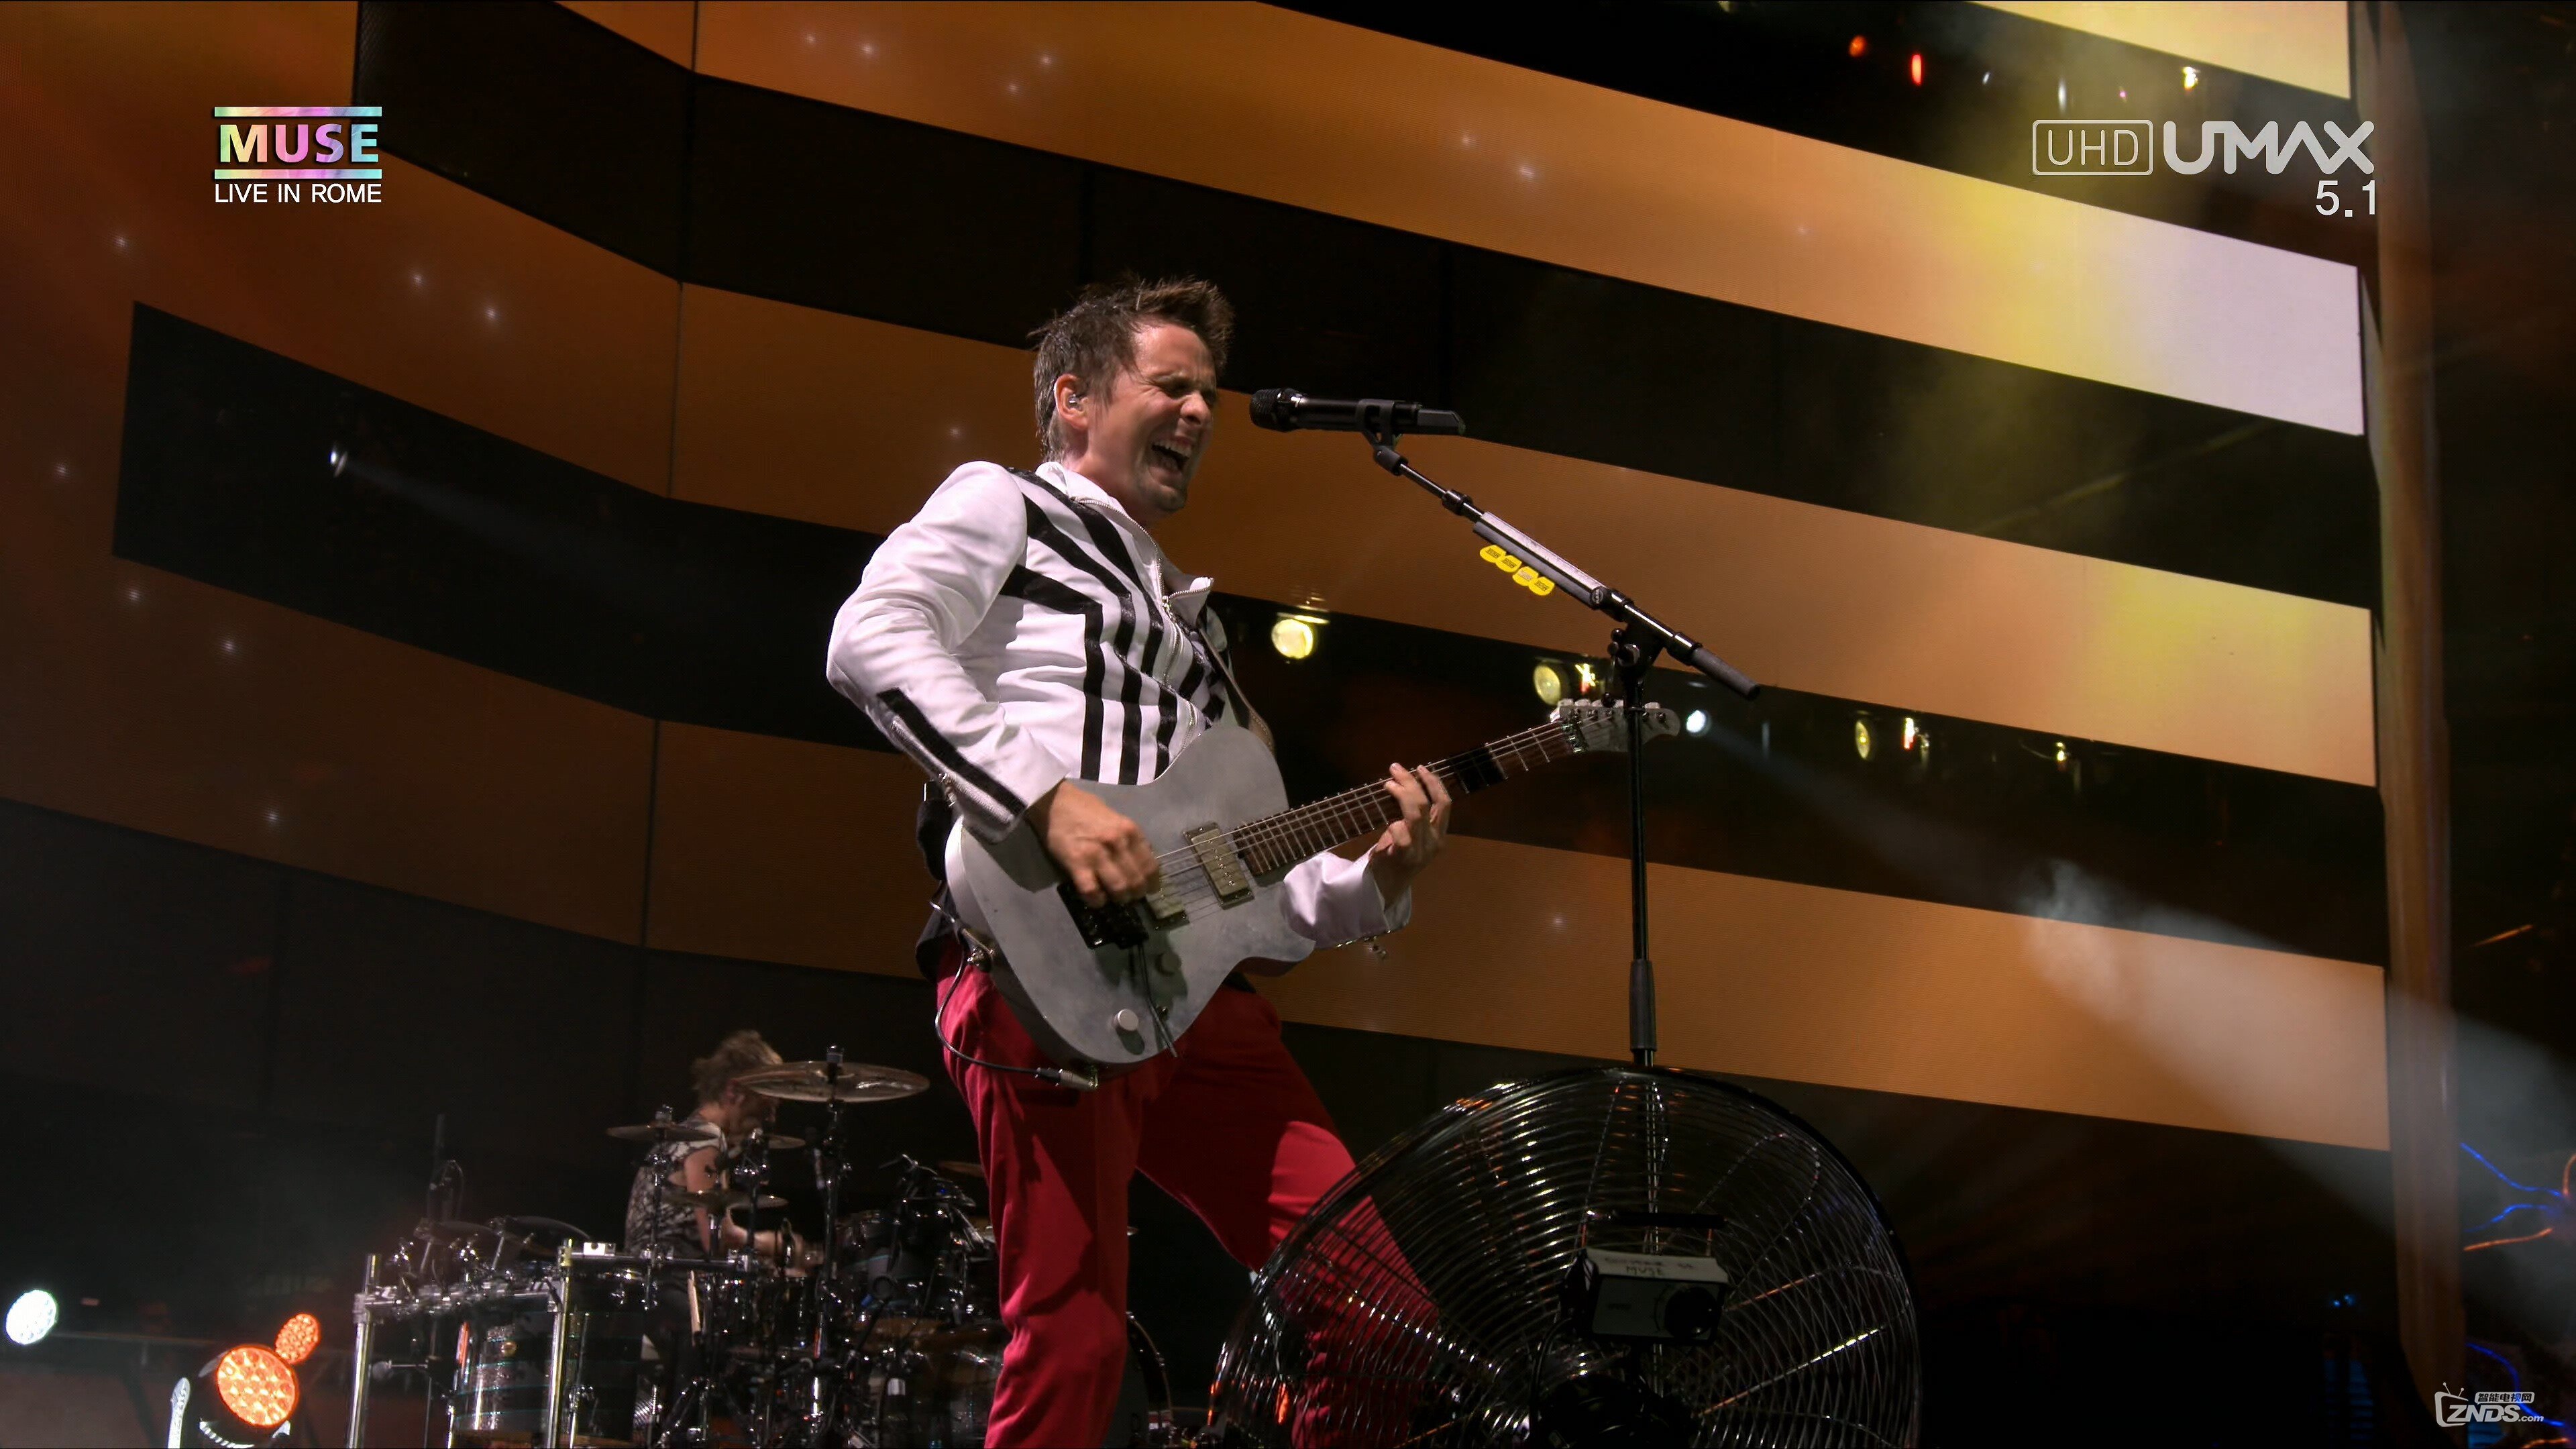 Muse.Live.At.Rome.Olympic.Stadium.2013.2160p.UHDTV.HEVC.mkv_20160312_231954.312.jpg